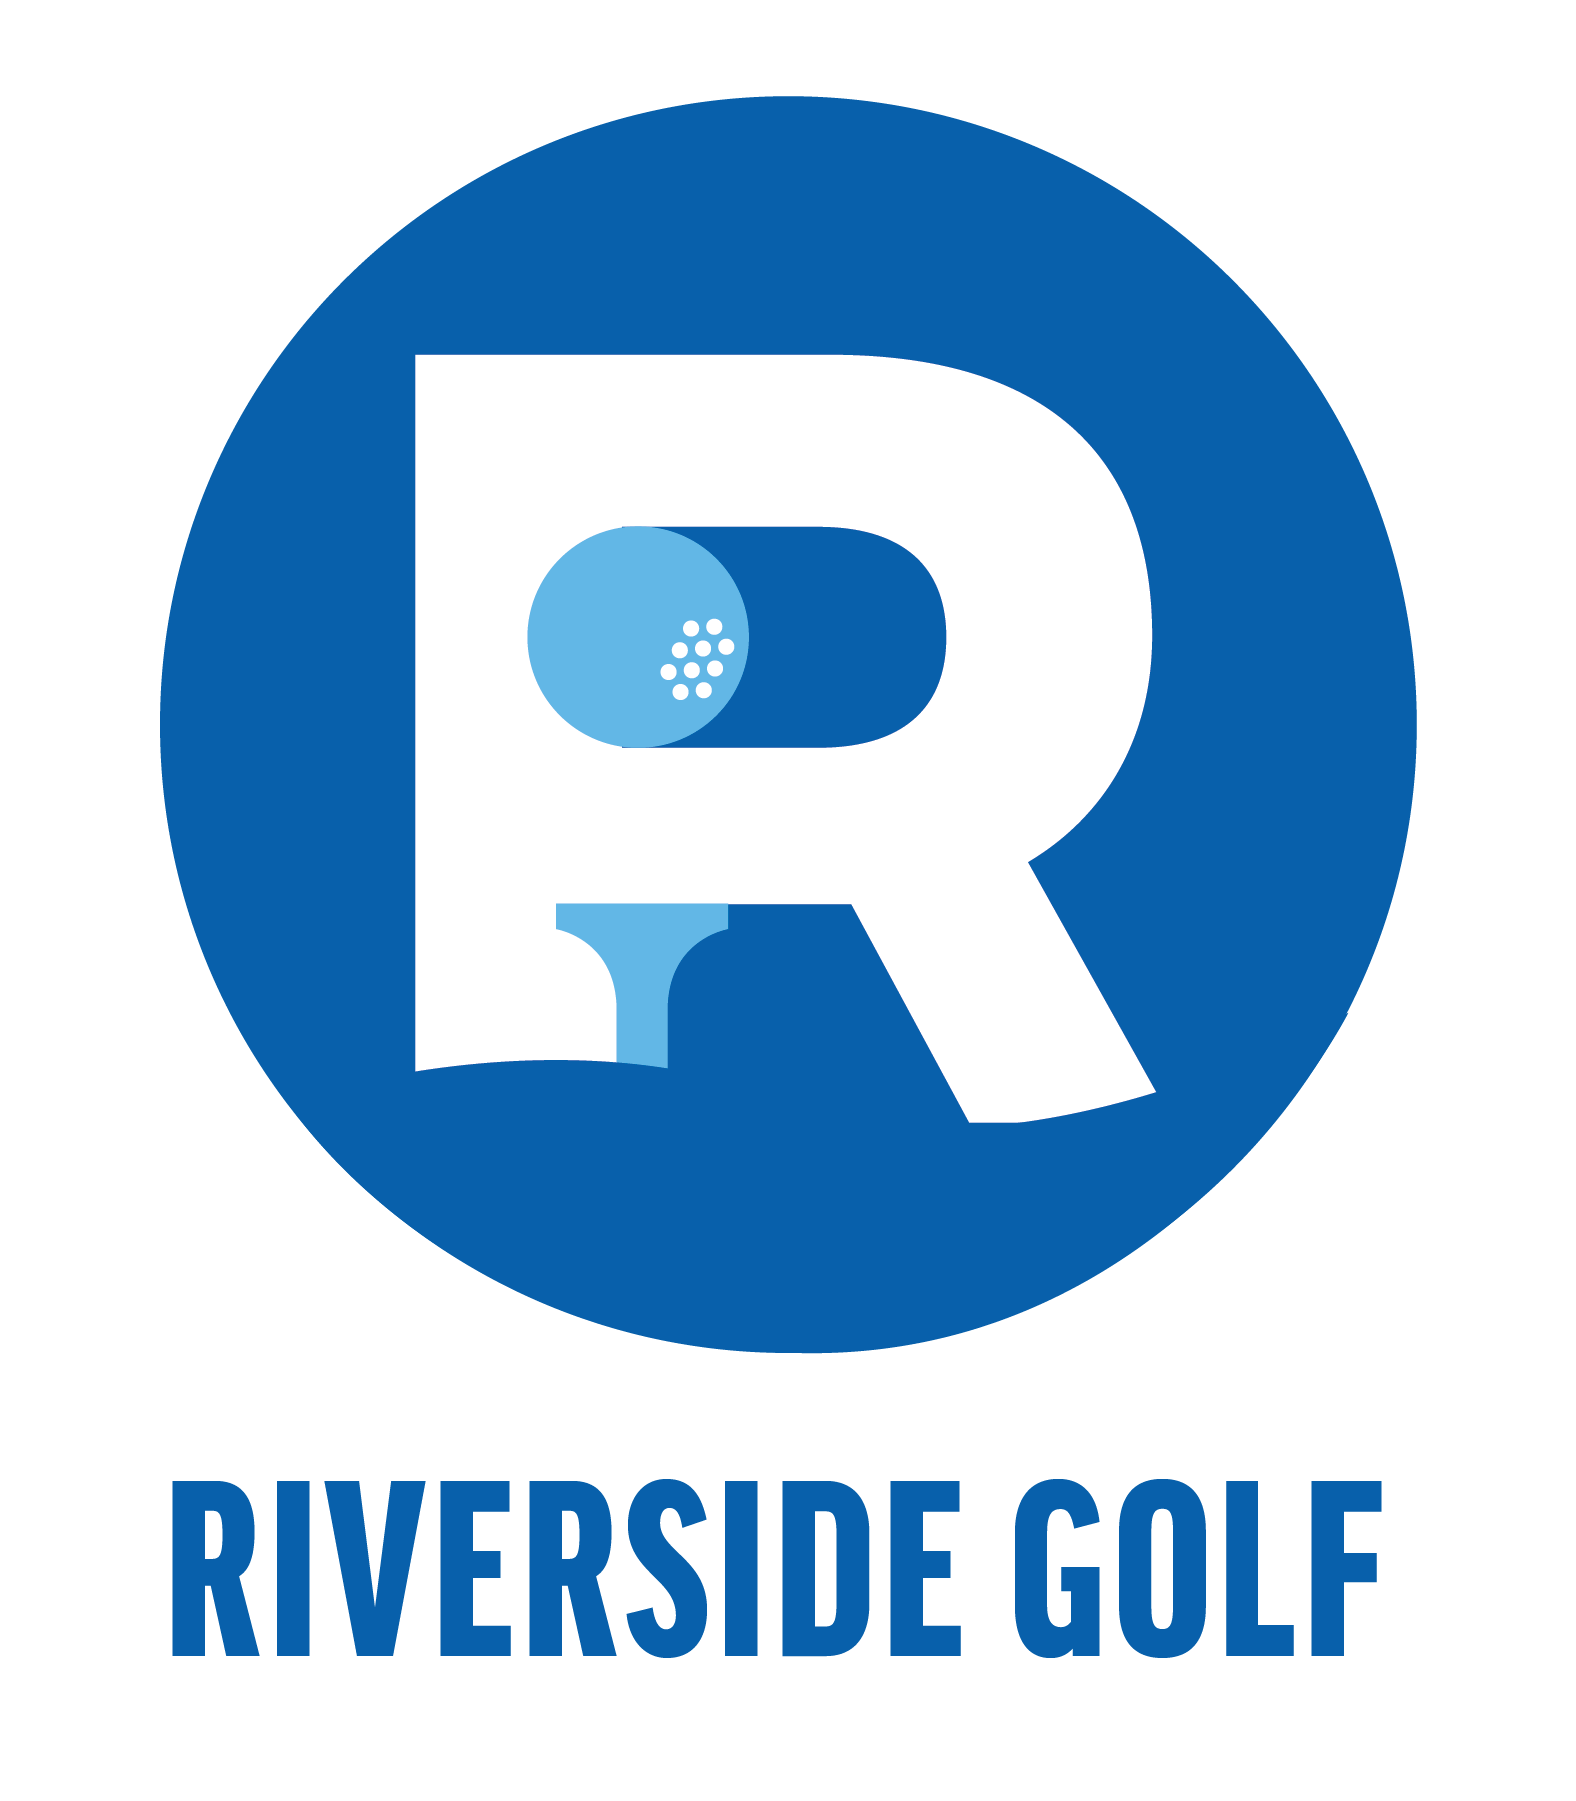 Riverside Golf Transparent for White Background 2